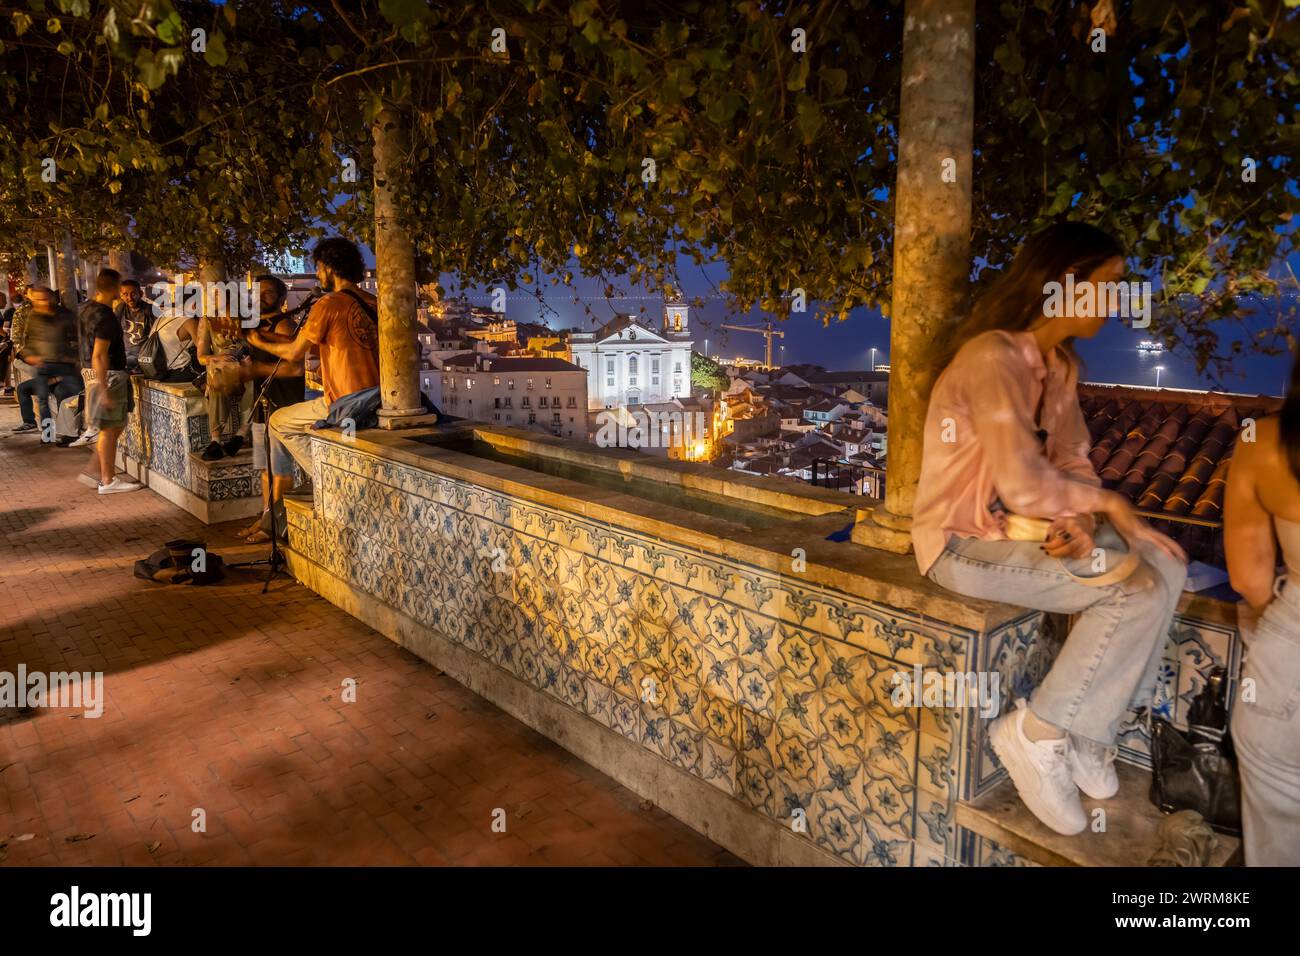 People at Miradouro de Santa Luzia at night in city of Lisbon, Portugal. Stock Photo